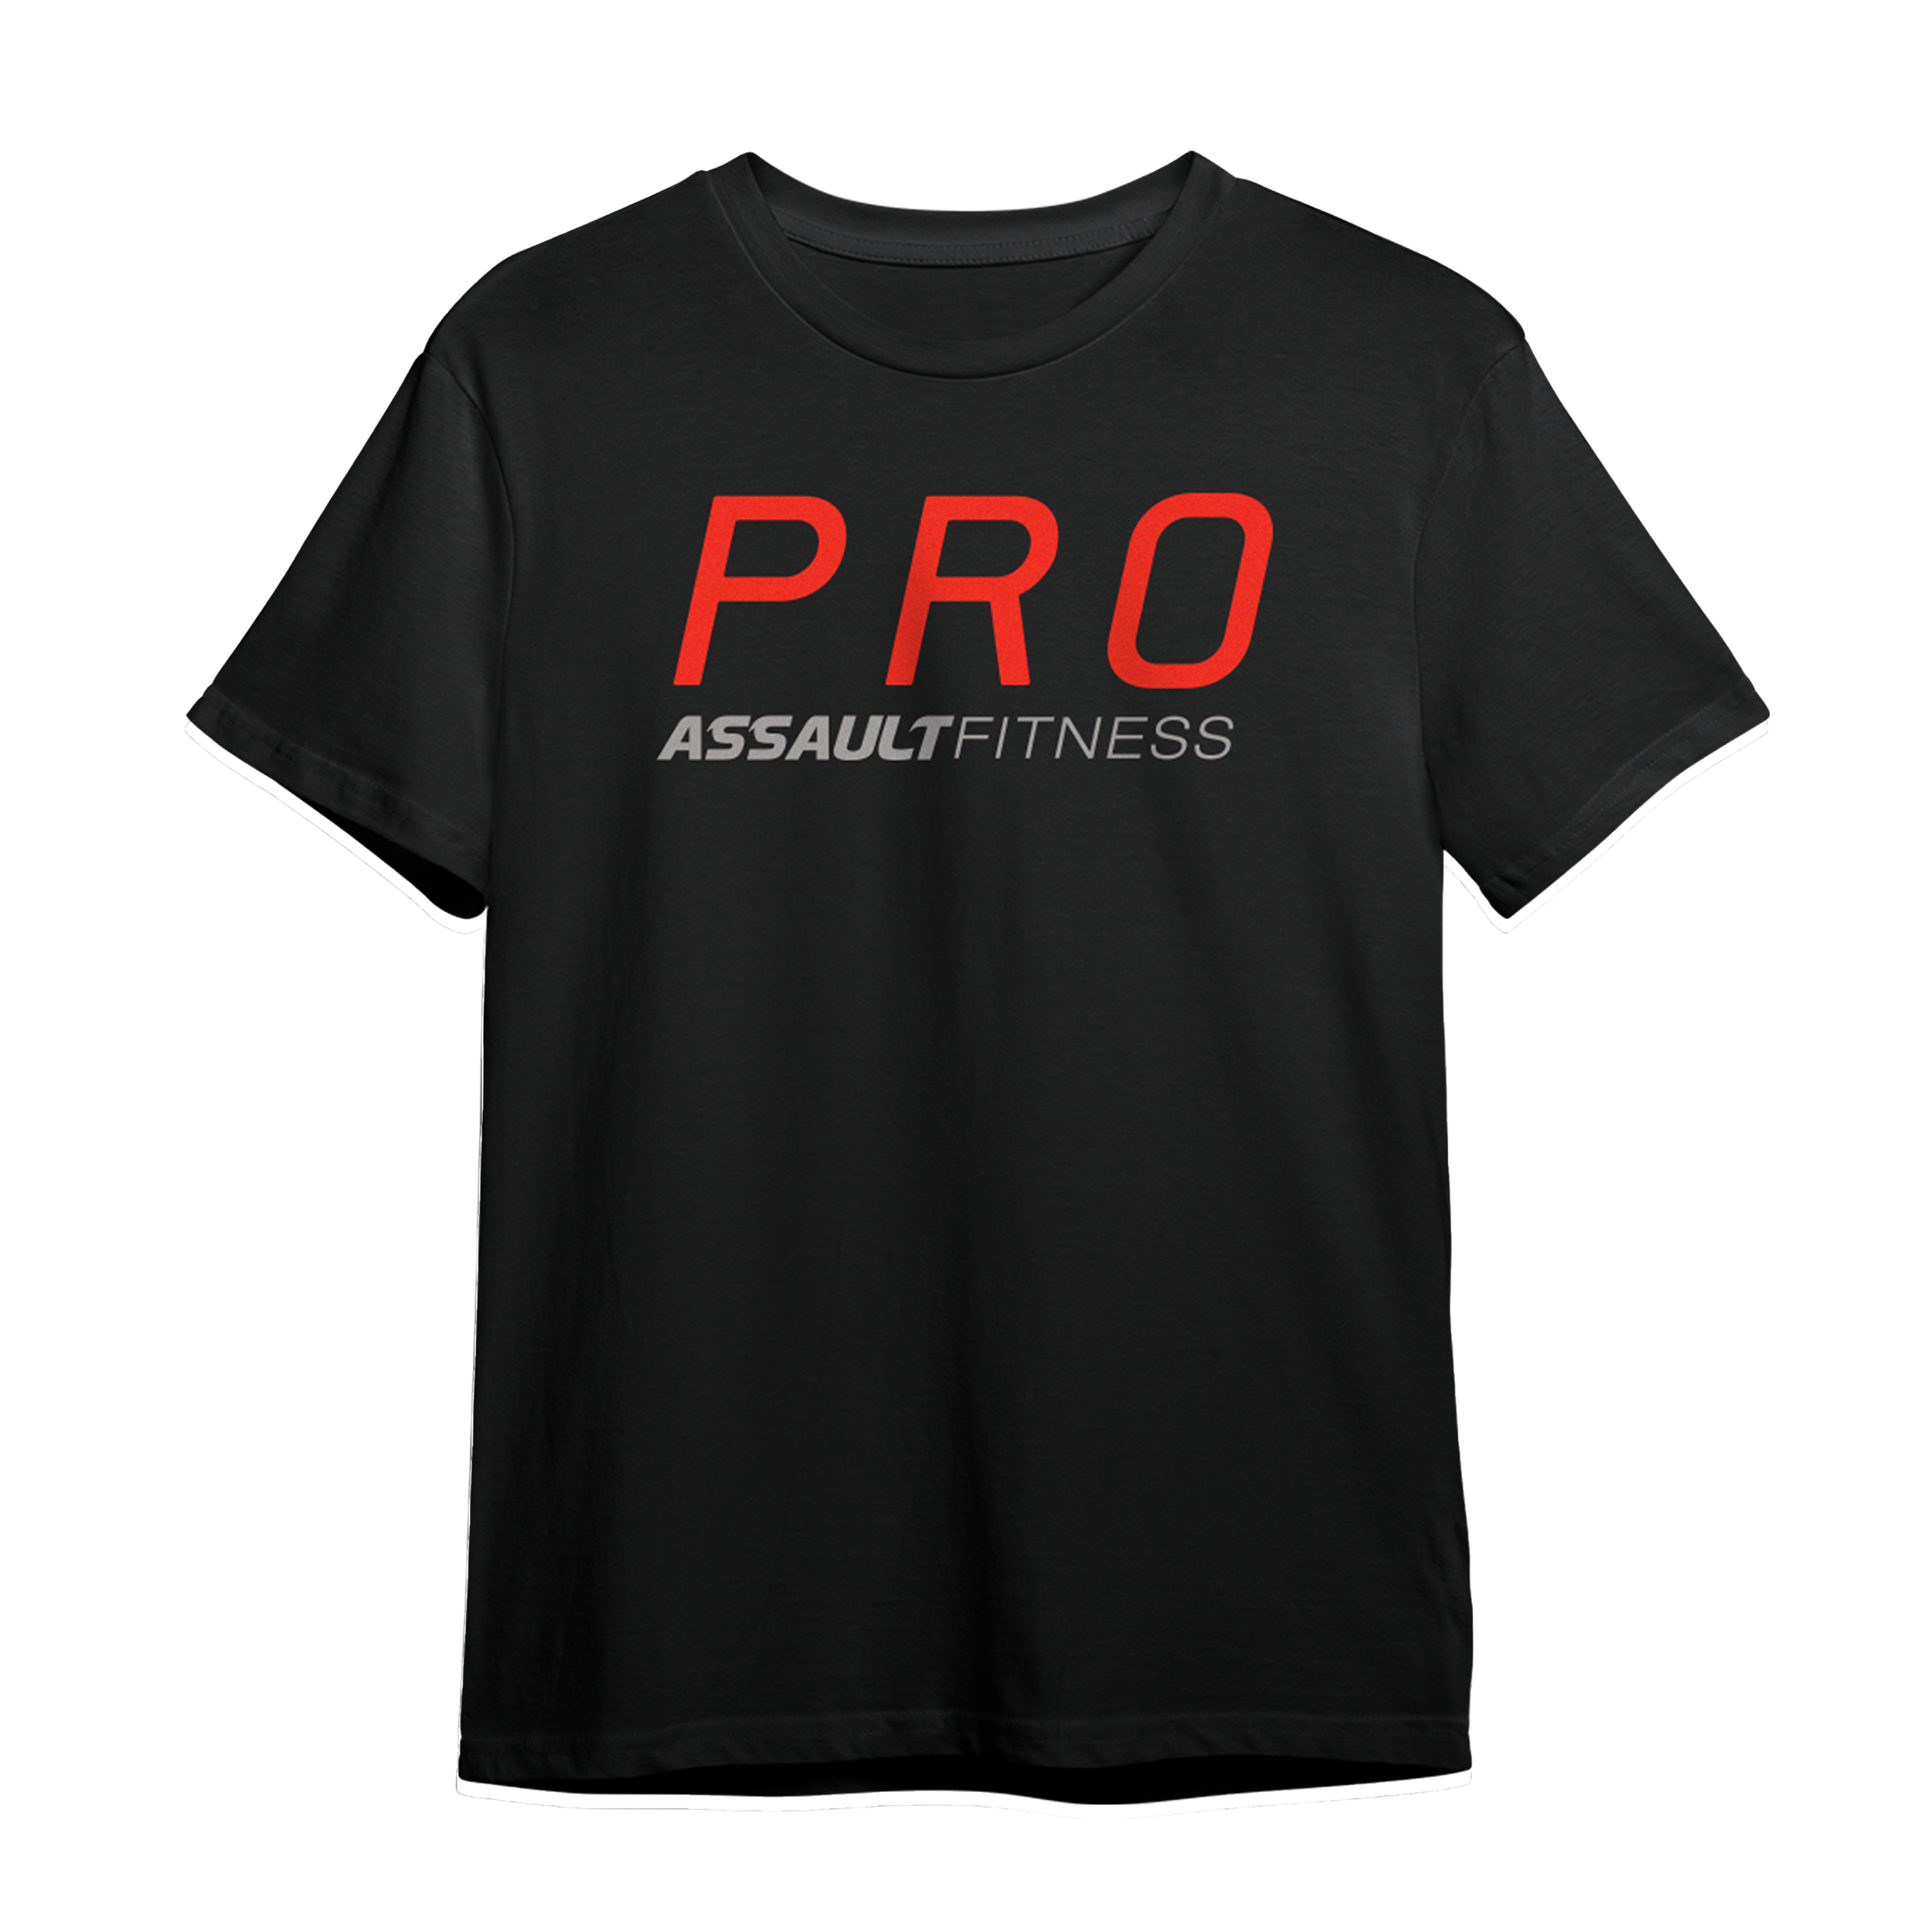 Pro T-Shirt